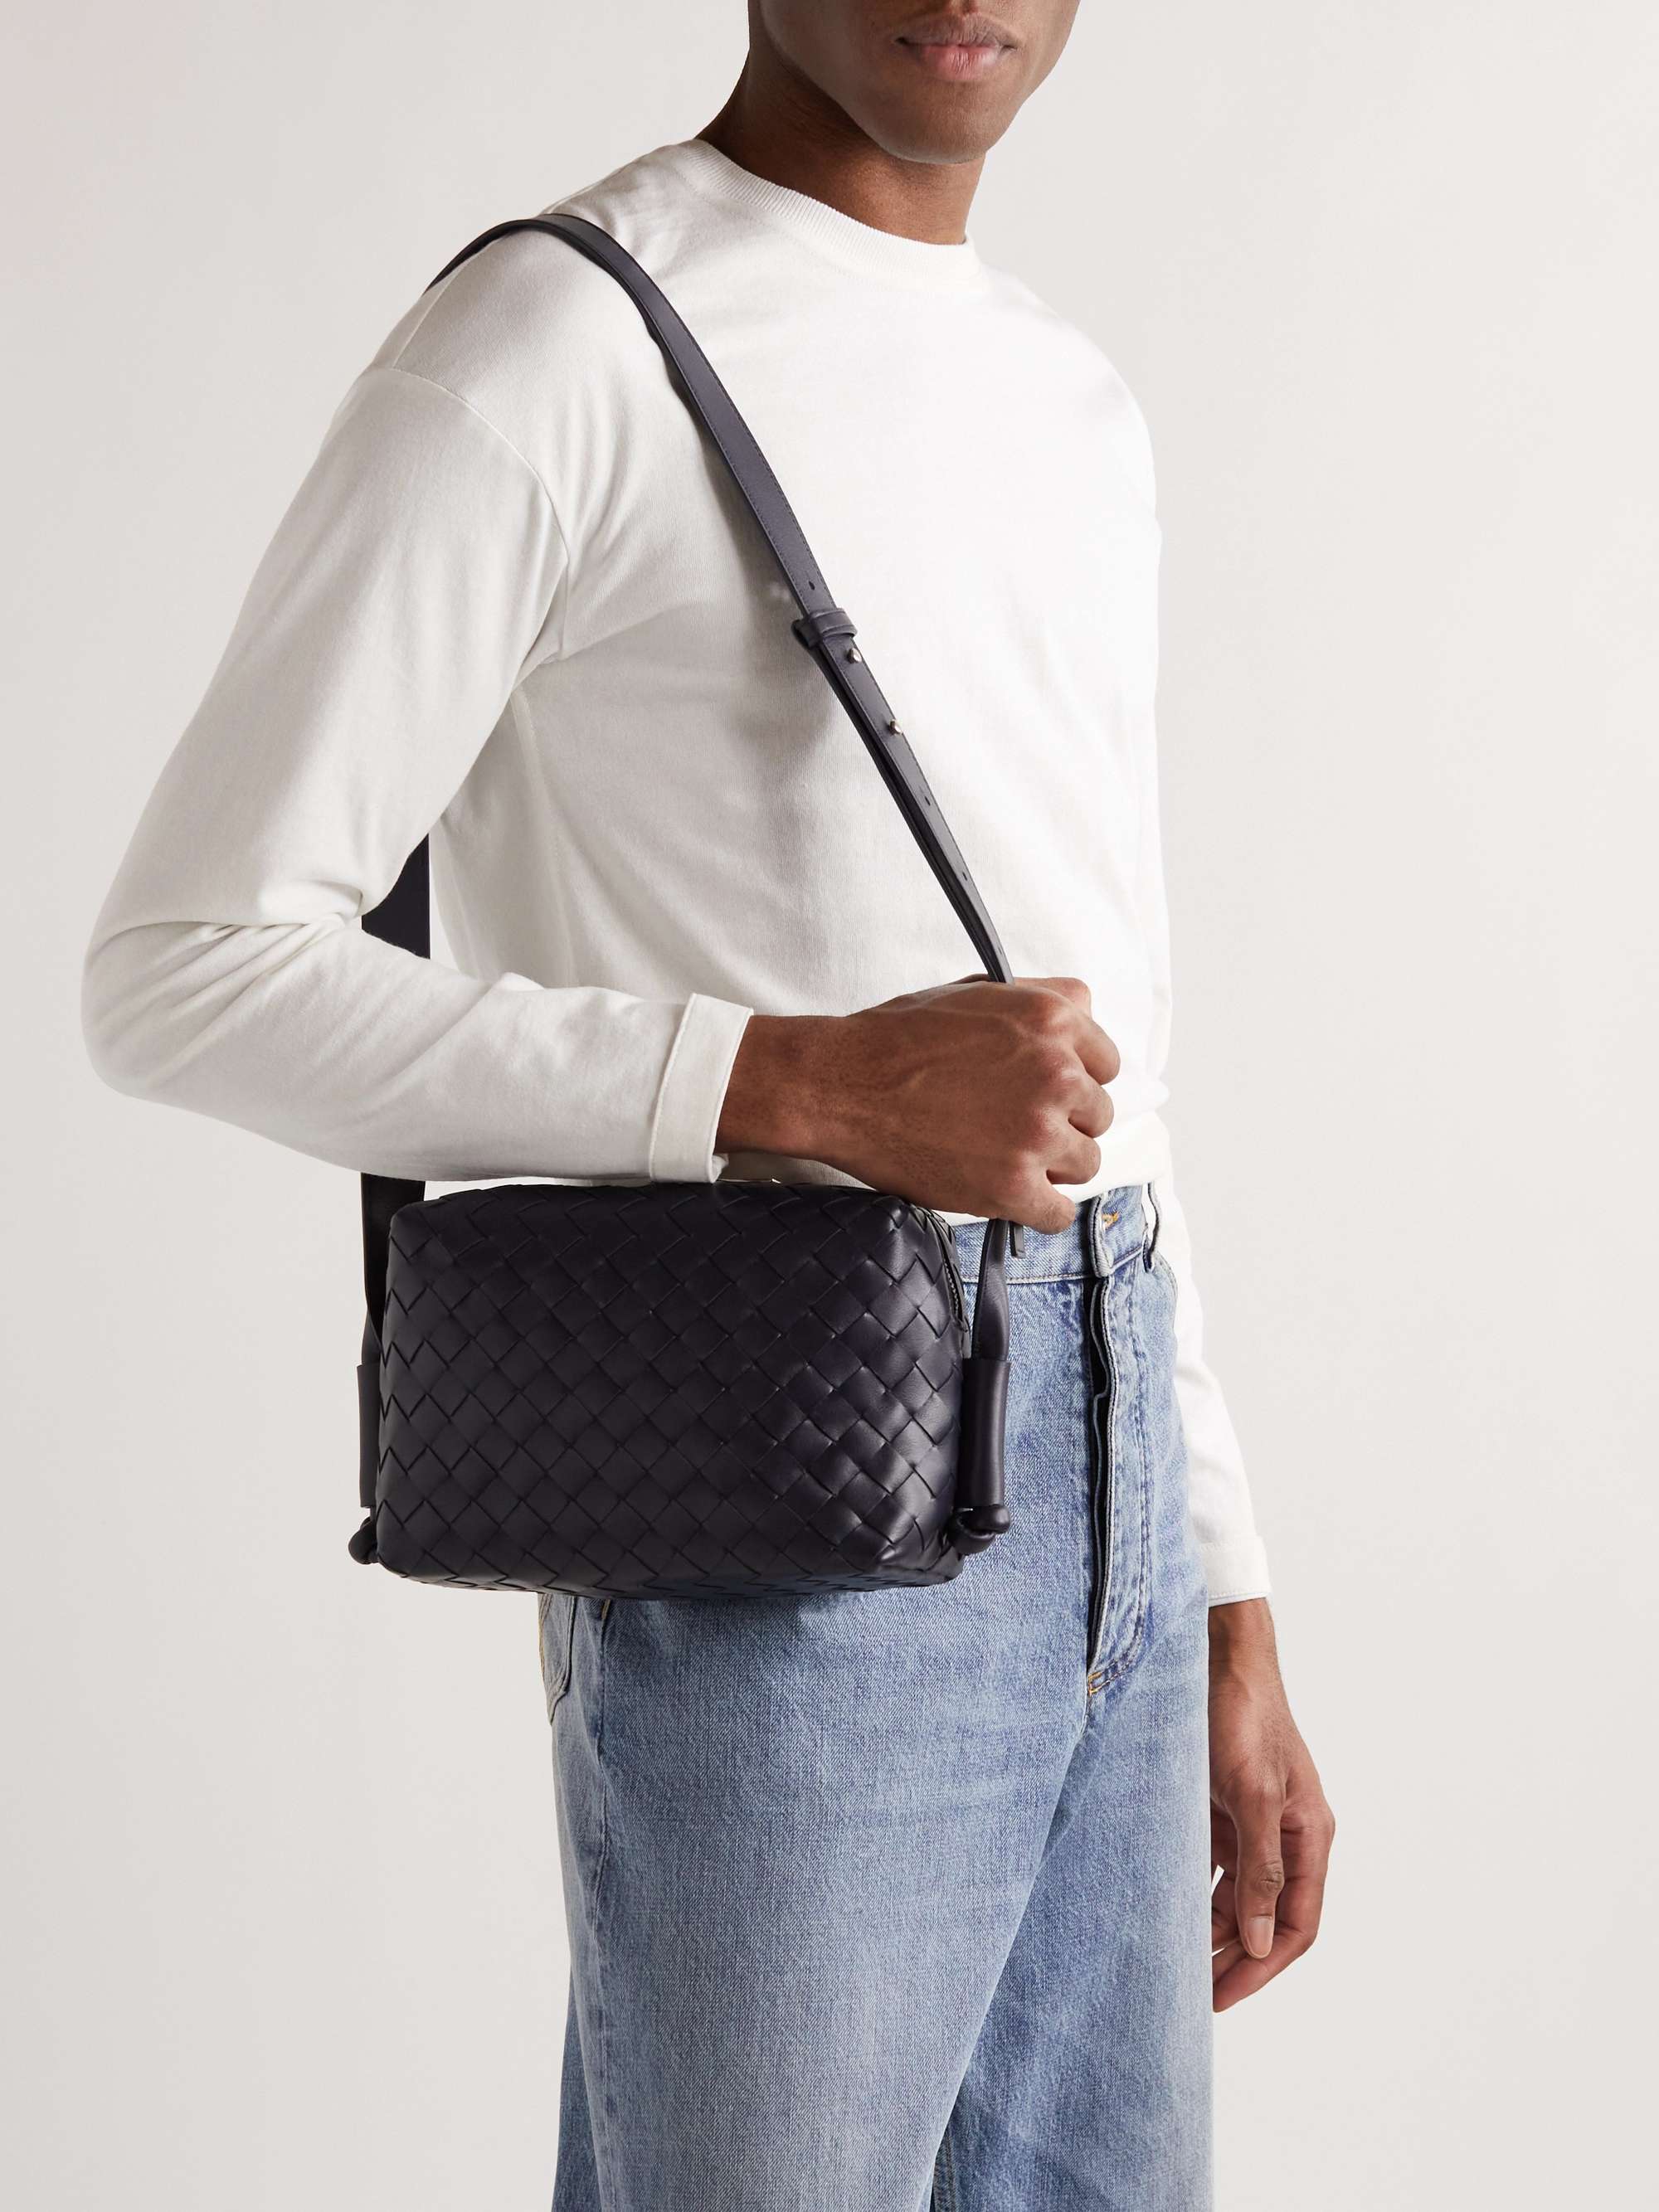 Bottega Veneta Bottega Veneta Men's Black Leather Messenger Bag - Stylemyle